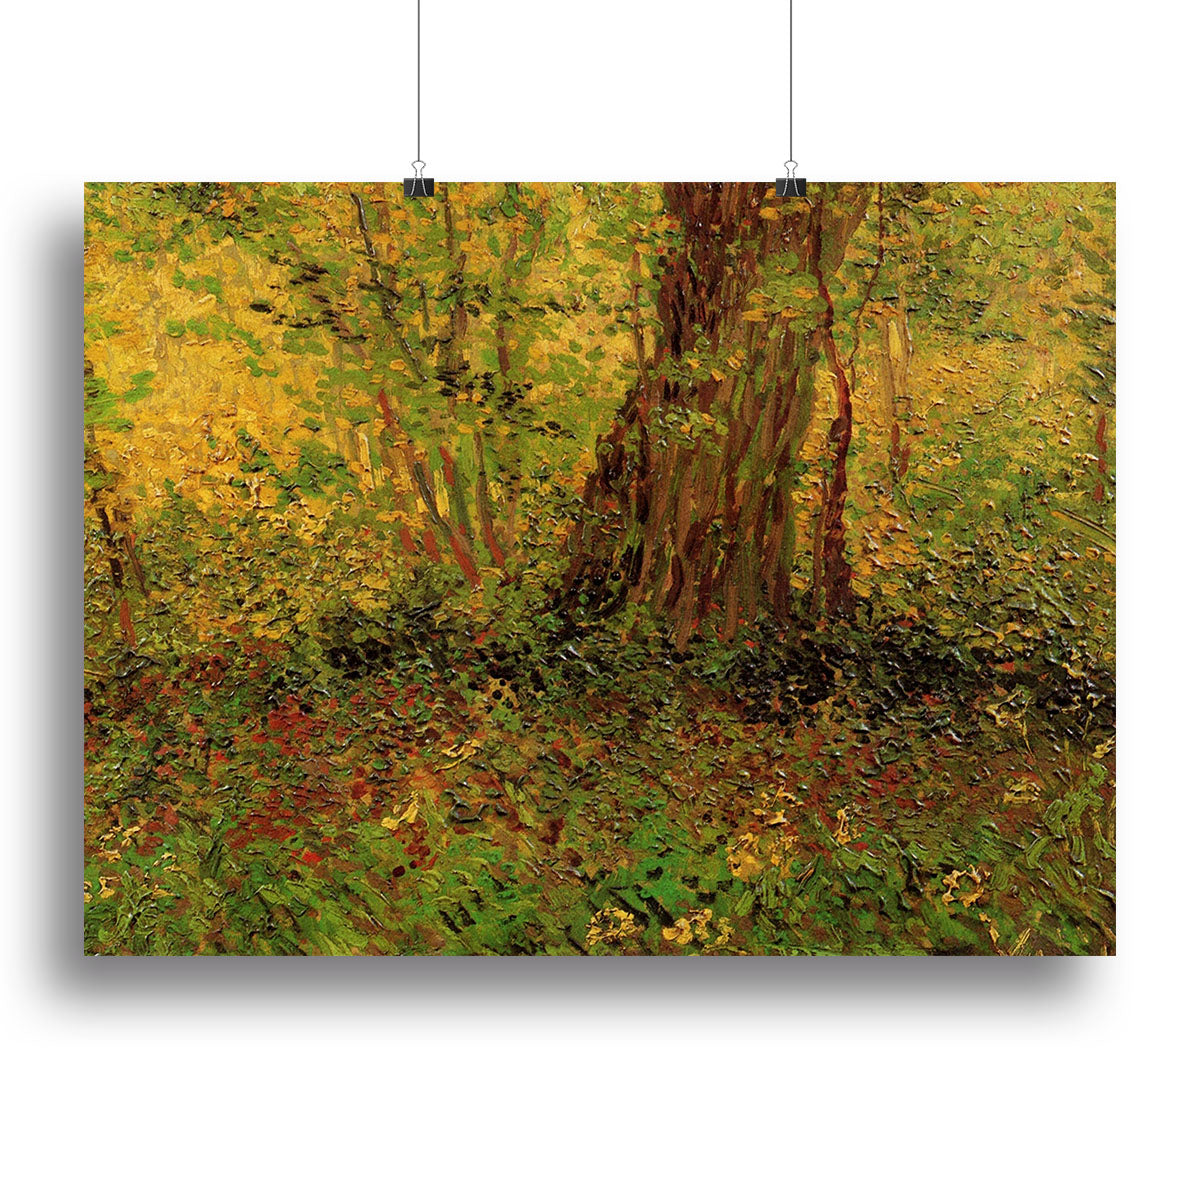 Undergrowth 2 by Van Gogh Canvas Print or Poster - Canvas Art Rocks - 2